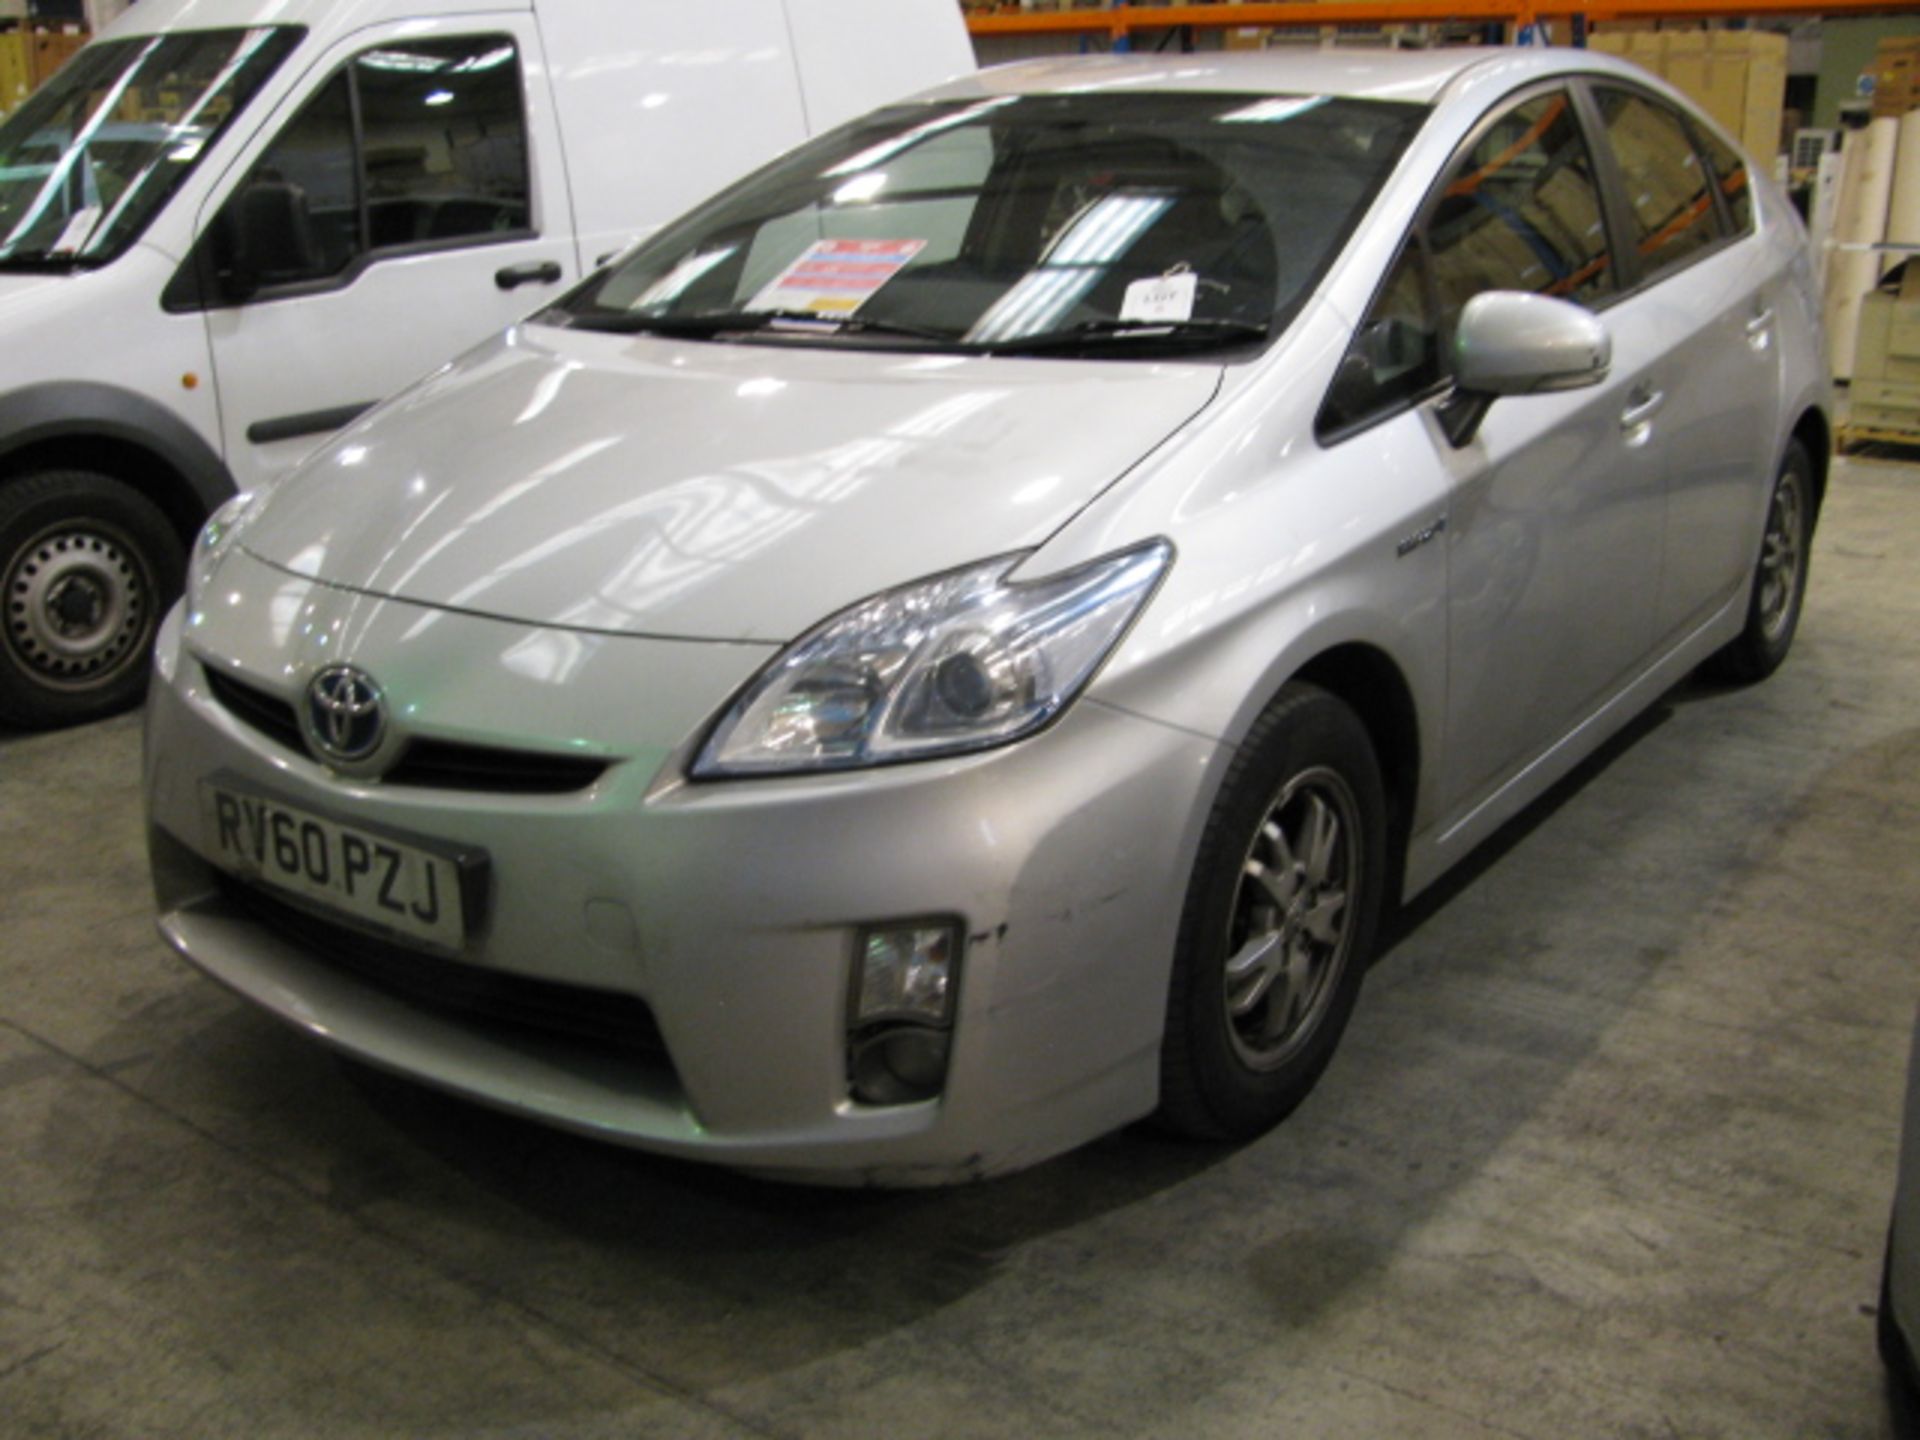 Toyota Prius T3 VVT hybrid electric 4 door hatchback, reg RV60 PZJ, miles: 163,412 - Image 3 of 6